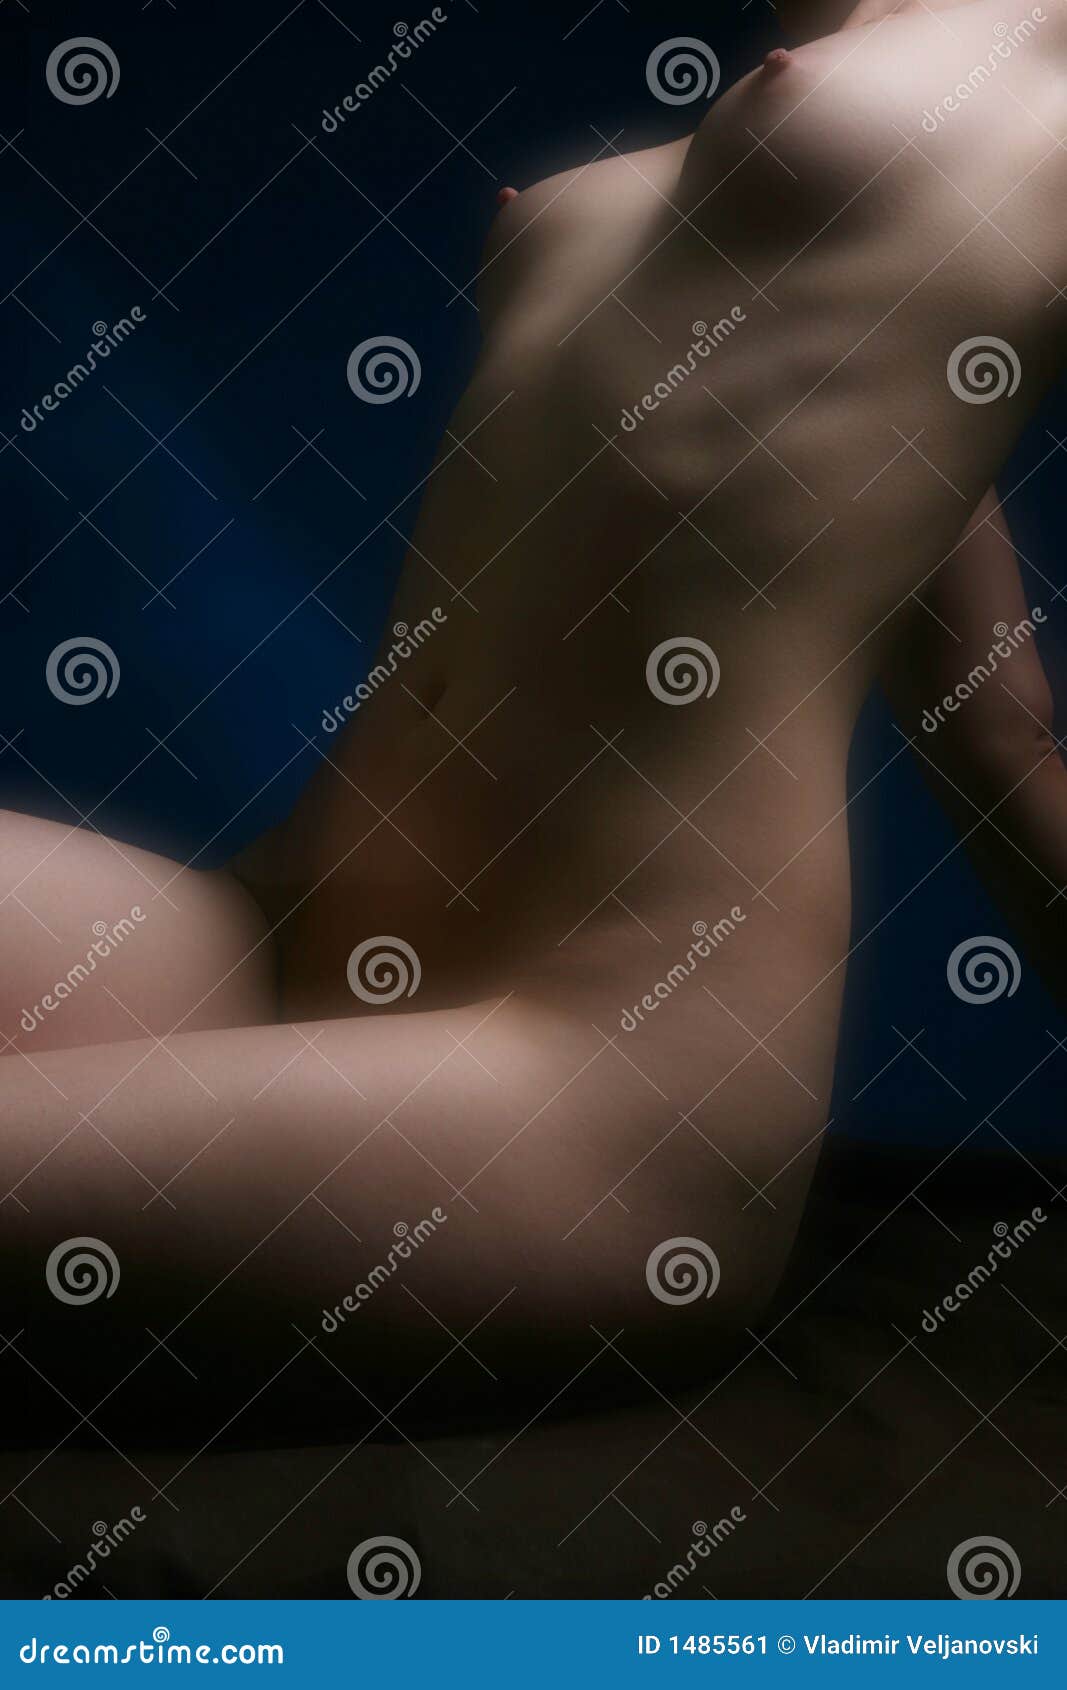 Celeb Stockphoto Nude Nipple Images Pic